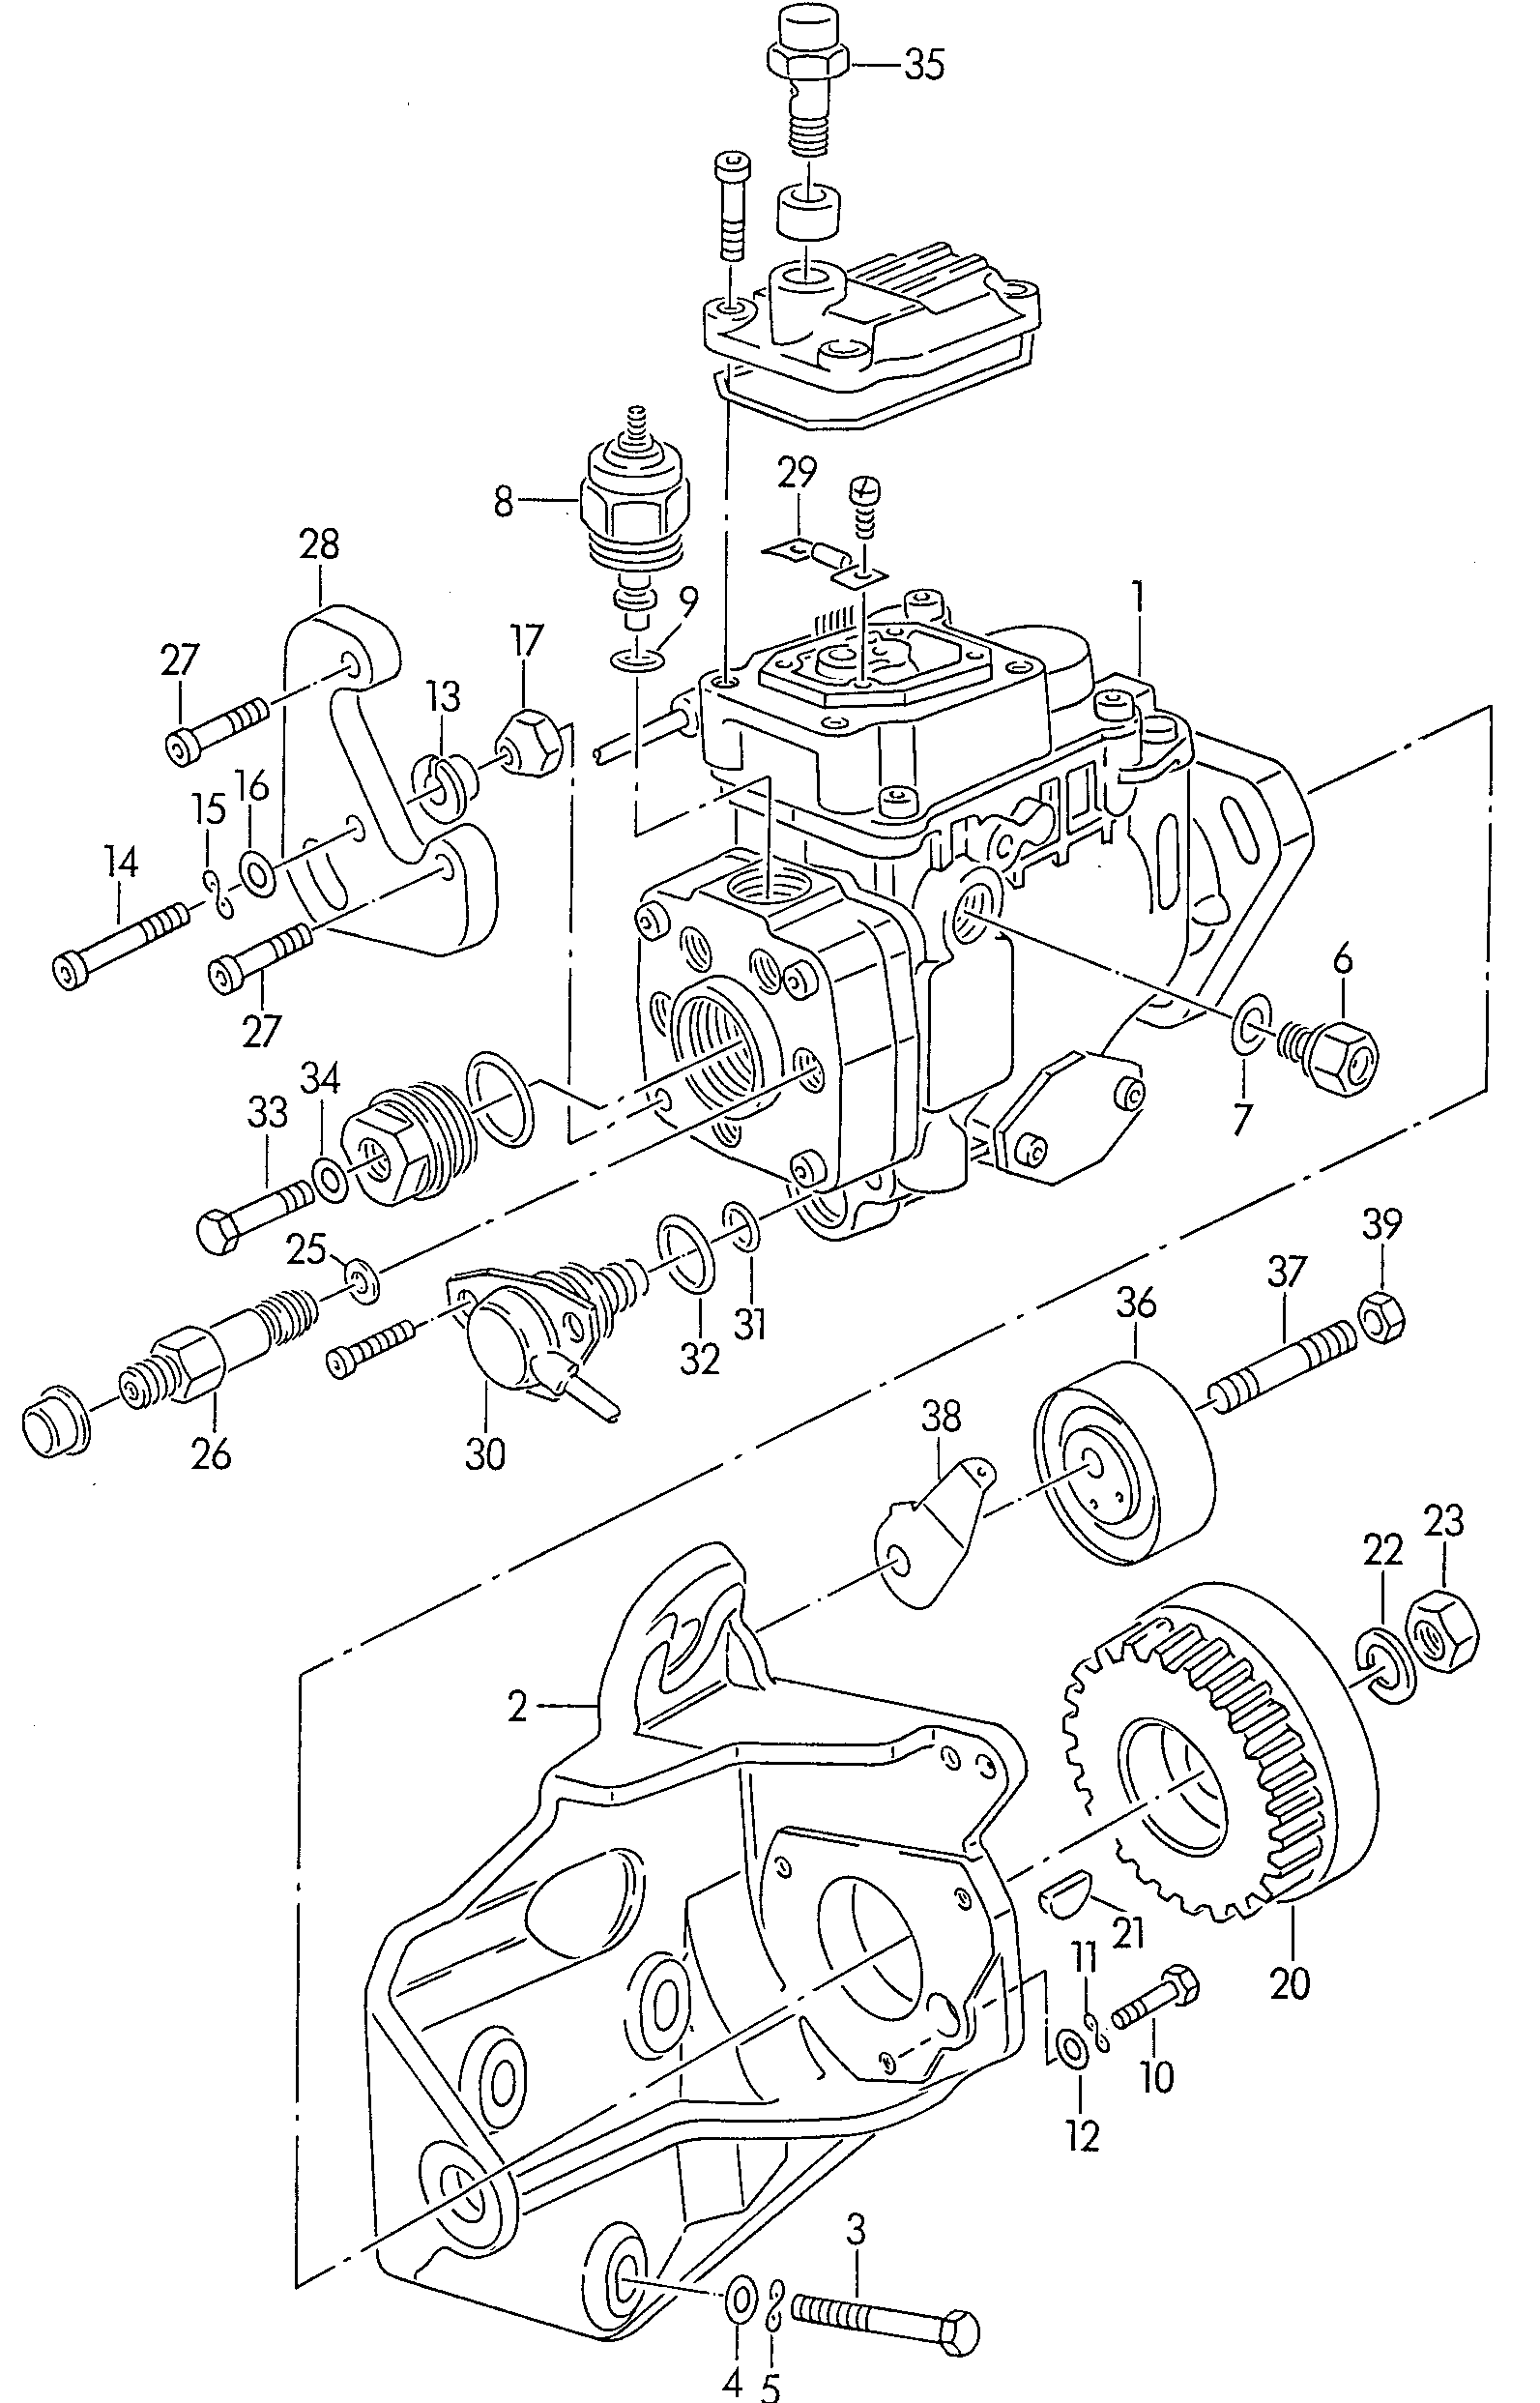 Pompa wtryskowa 2,5 ltr. - Audi 100/Avant - a100